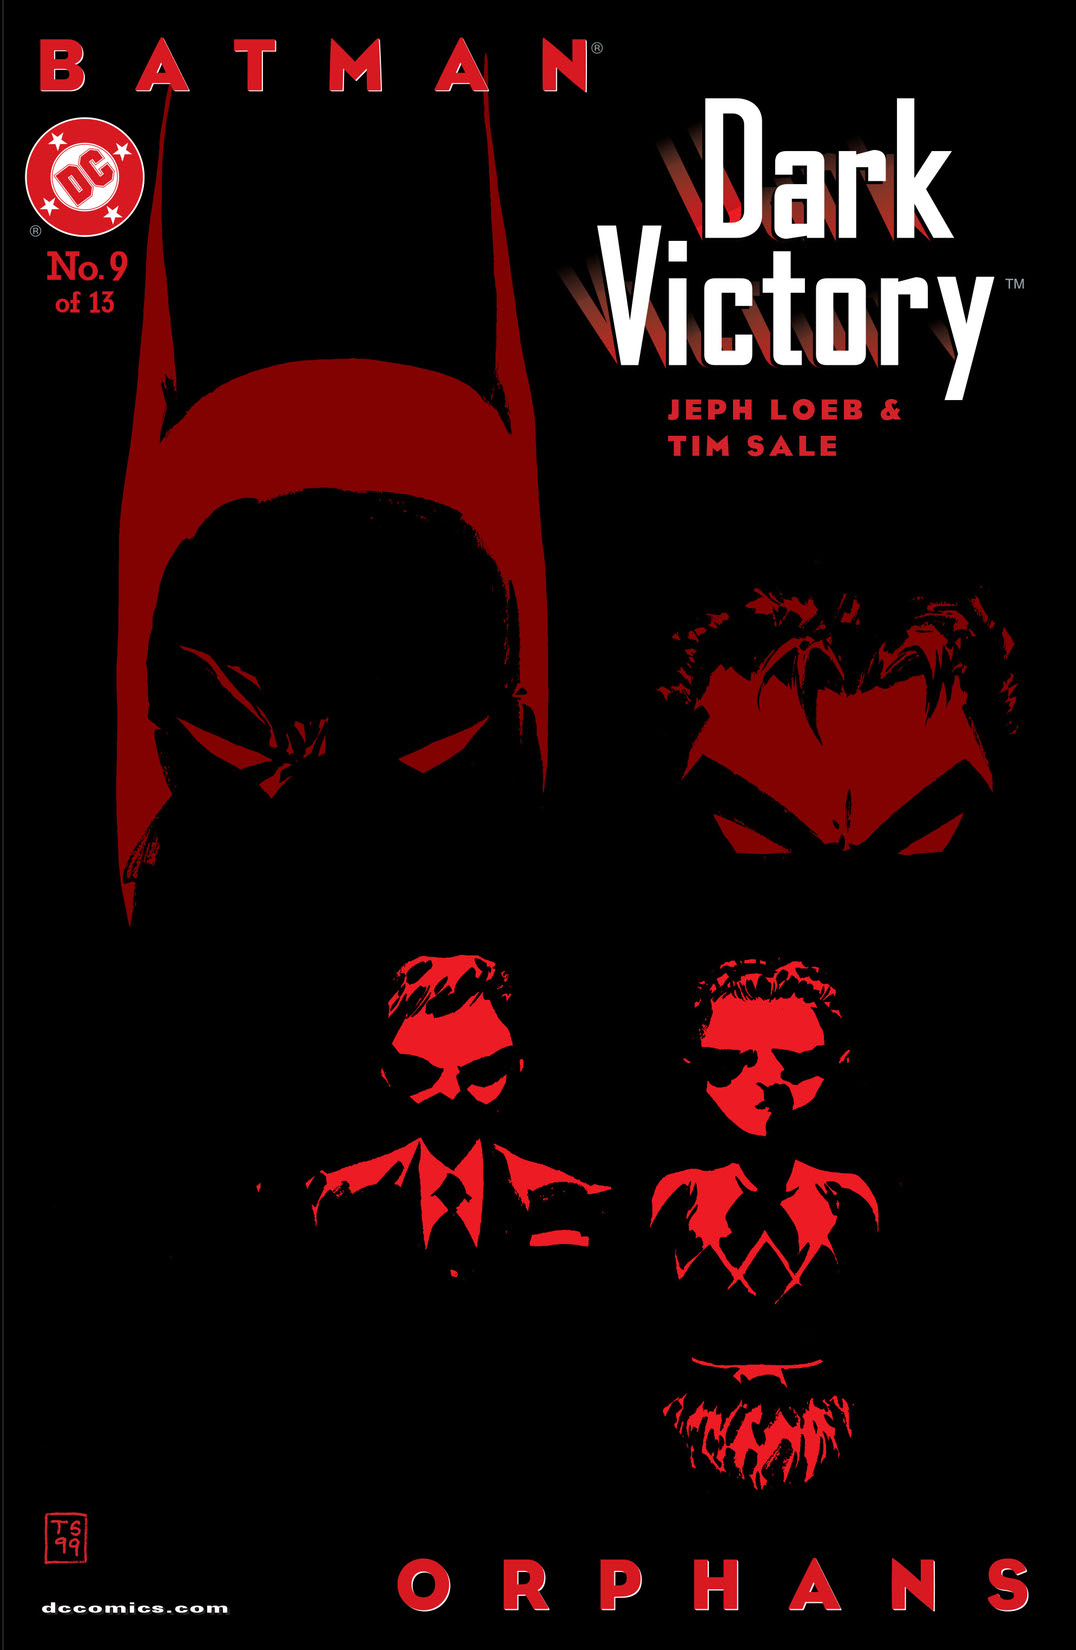 Batman: Dark Victory #9 preview images